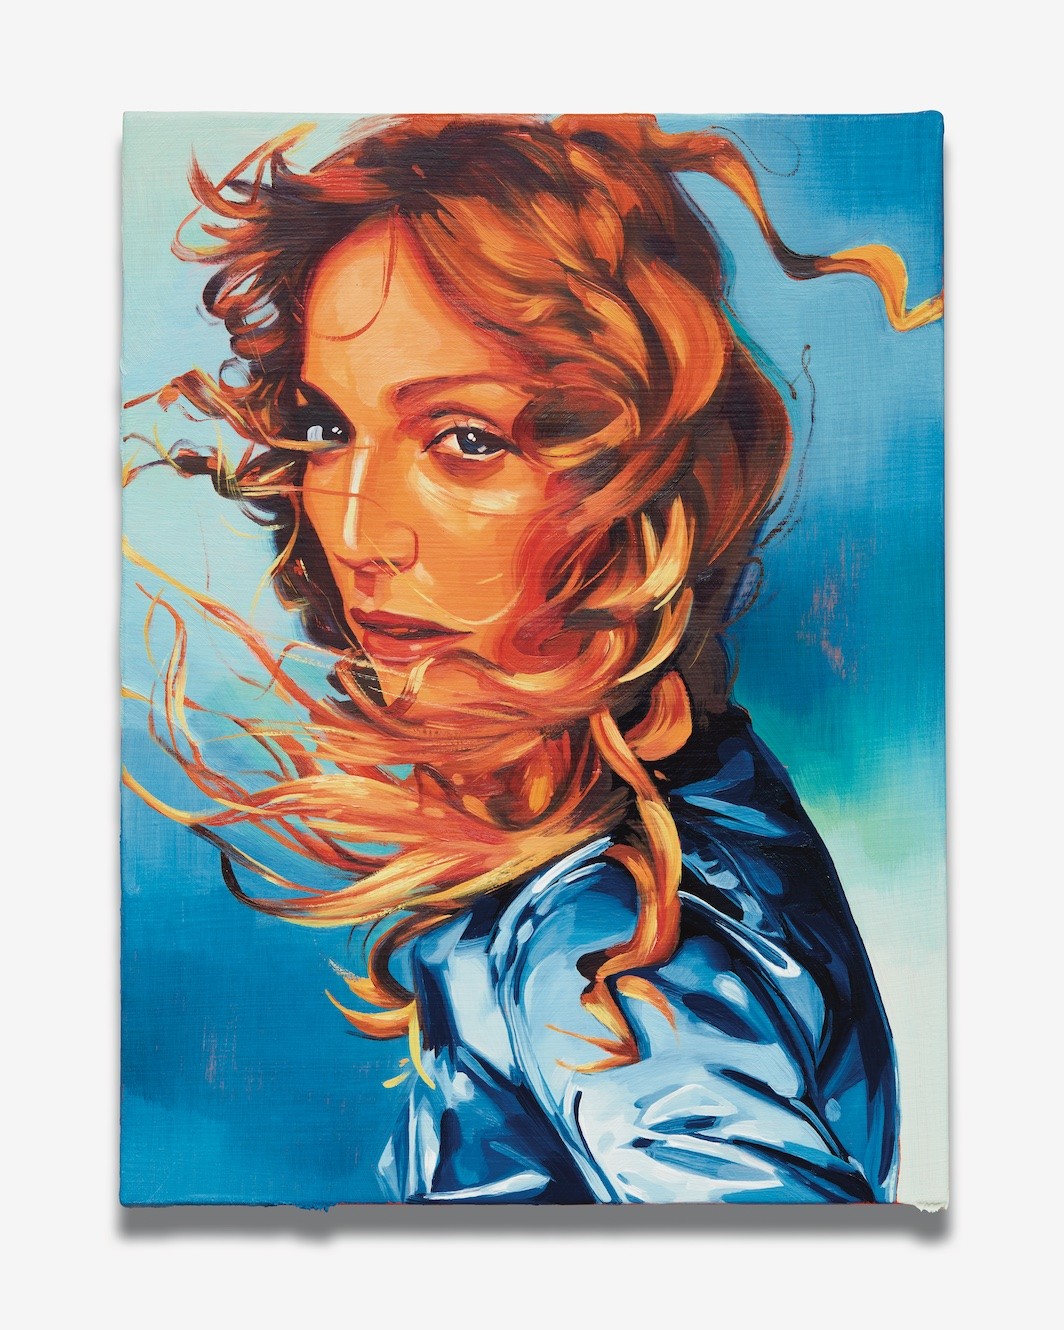 Sam McKinniss, Madonna, 2018, oil and acrylic on canvas, 16 x 12". Courtesy the artist and Almine Rech